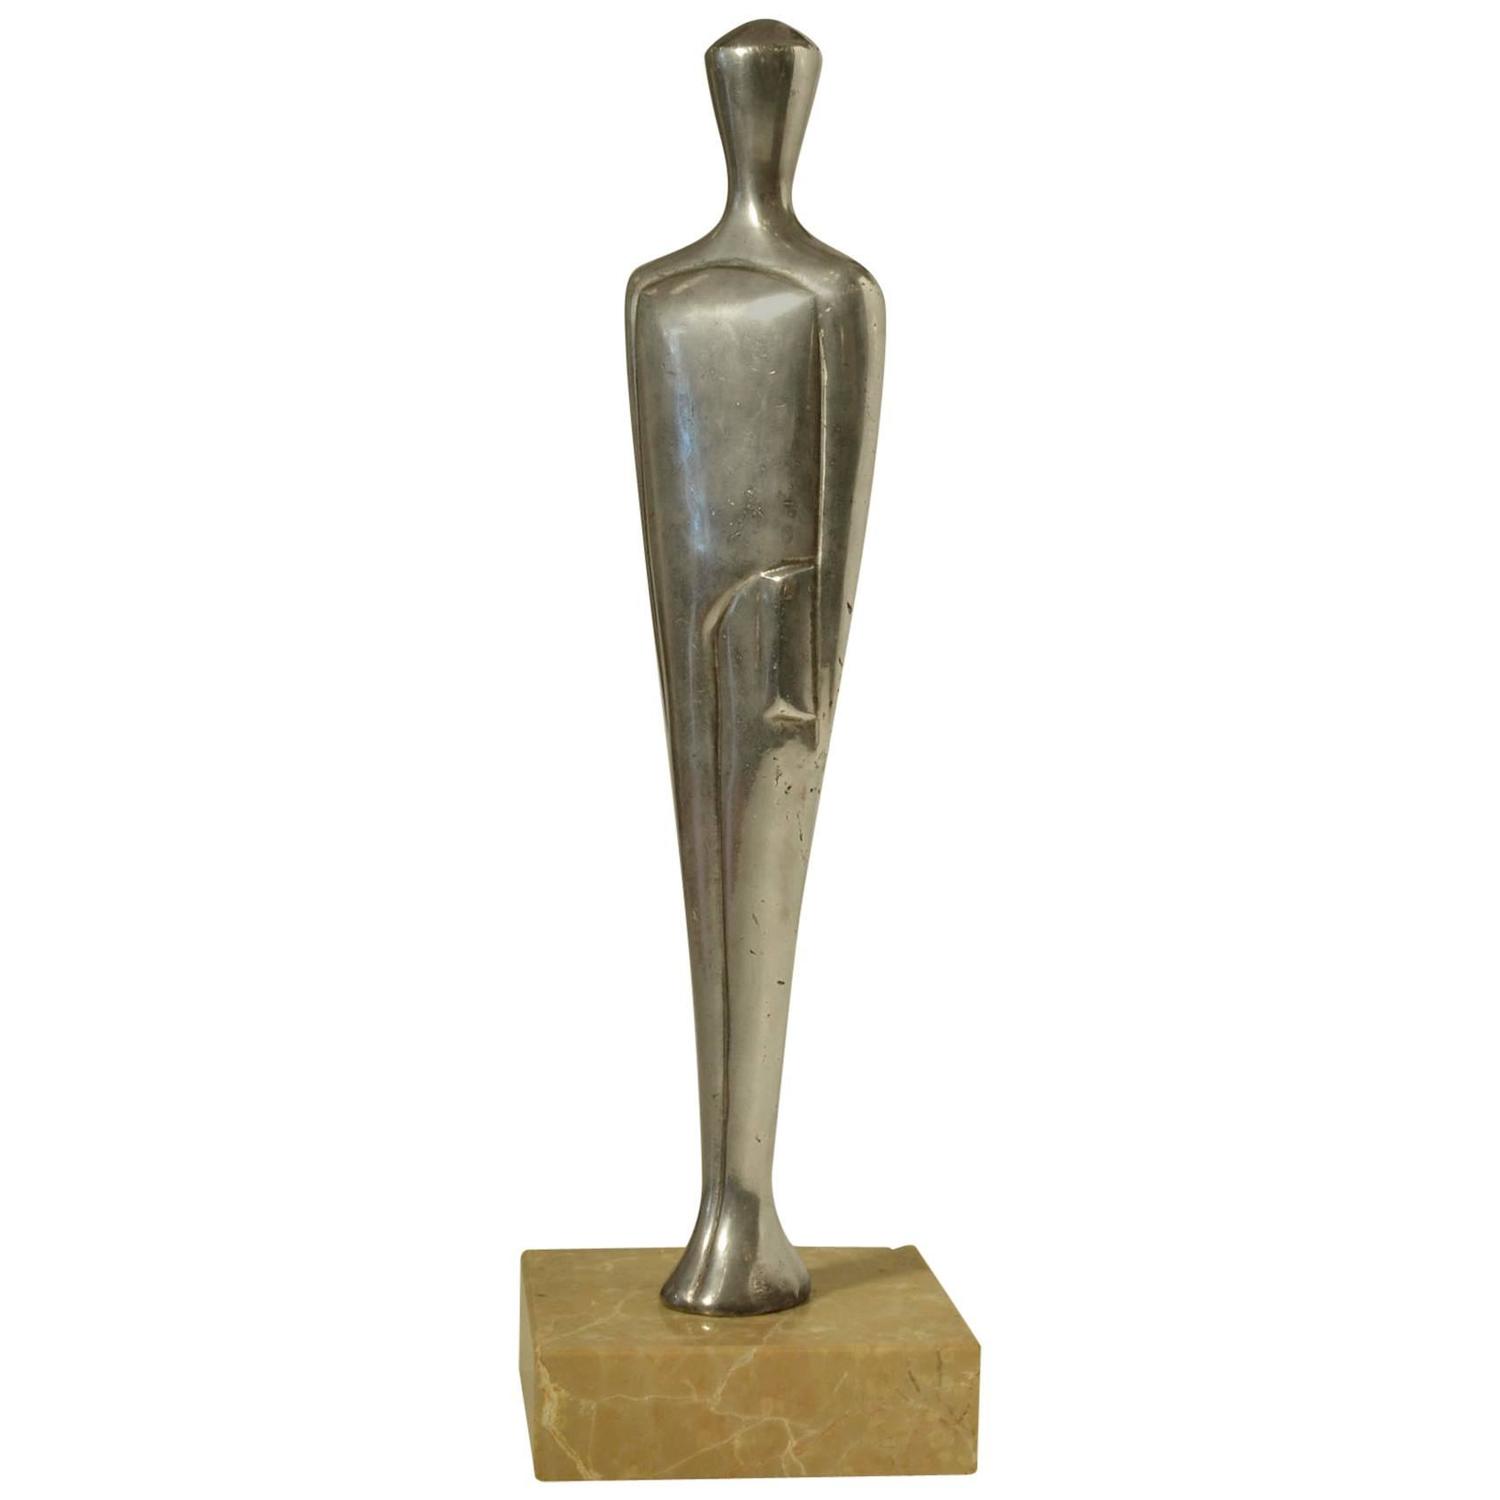 1930s Figurative Oscar Sculpture by E.W. Lane at 1stdibs